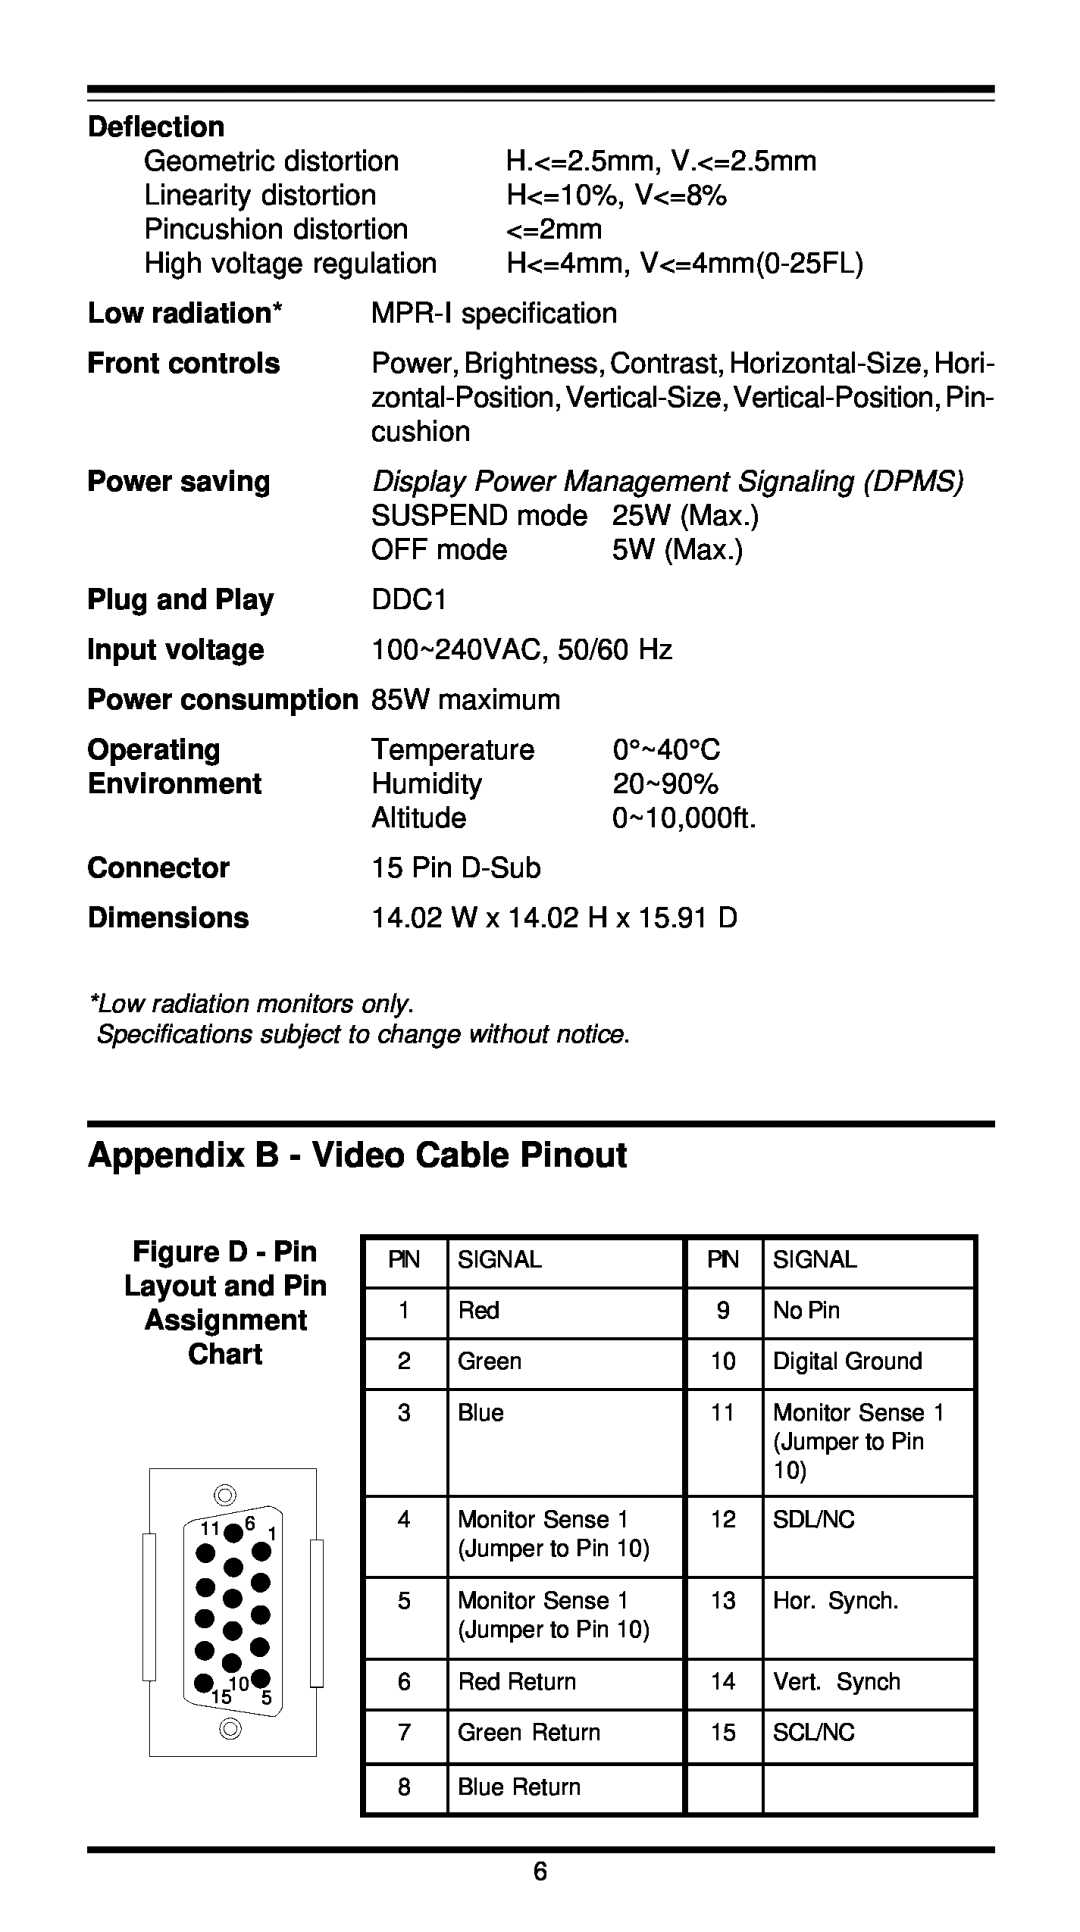 MaxTech XT4862 user manual Appendix B - Video Cable Pinout, Display Power Management Signaling DPMS 